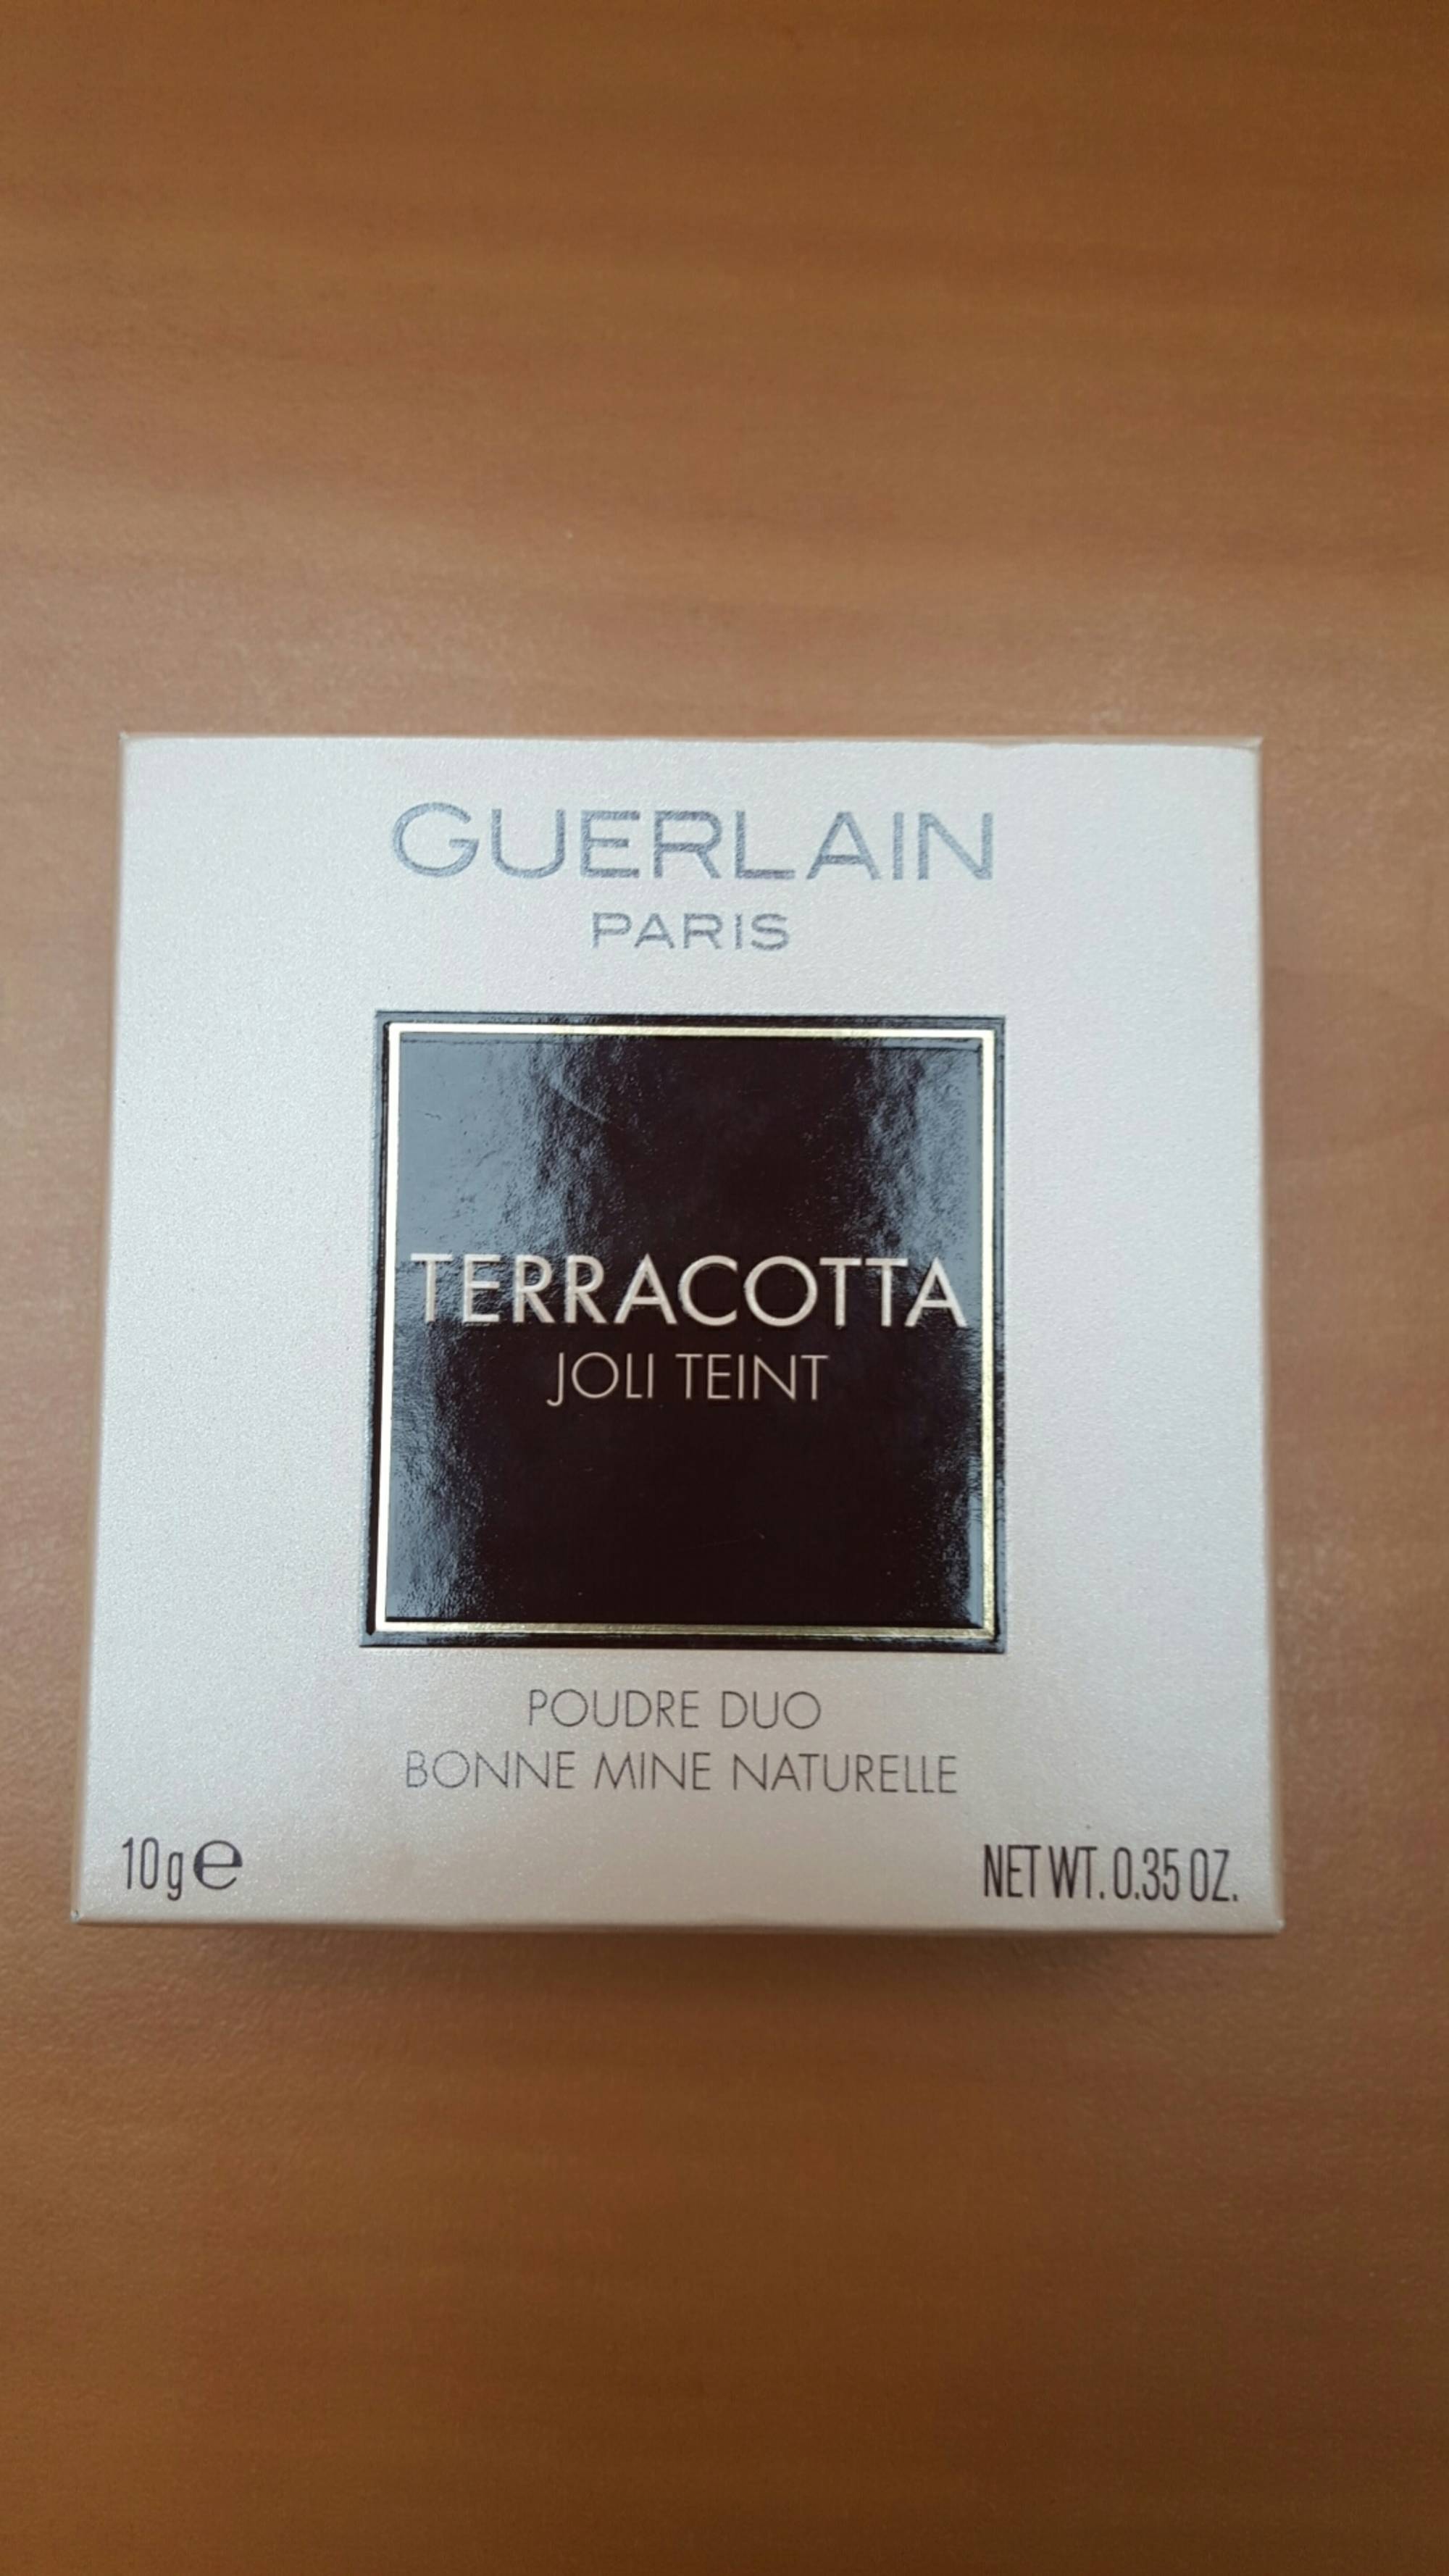 GUERLAIN - Terracotta joli teint - Poudre duo bonne mine naturelle